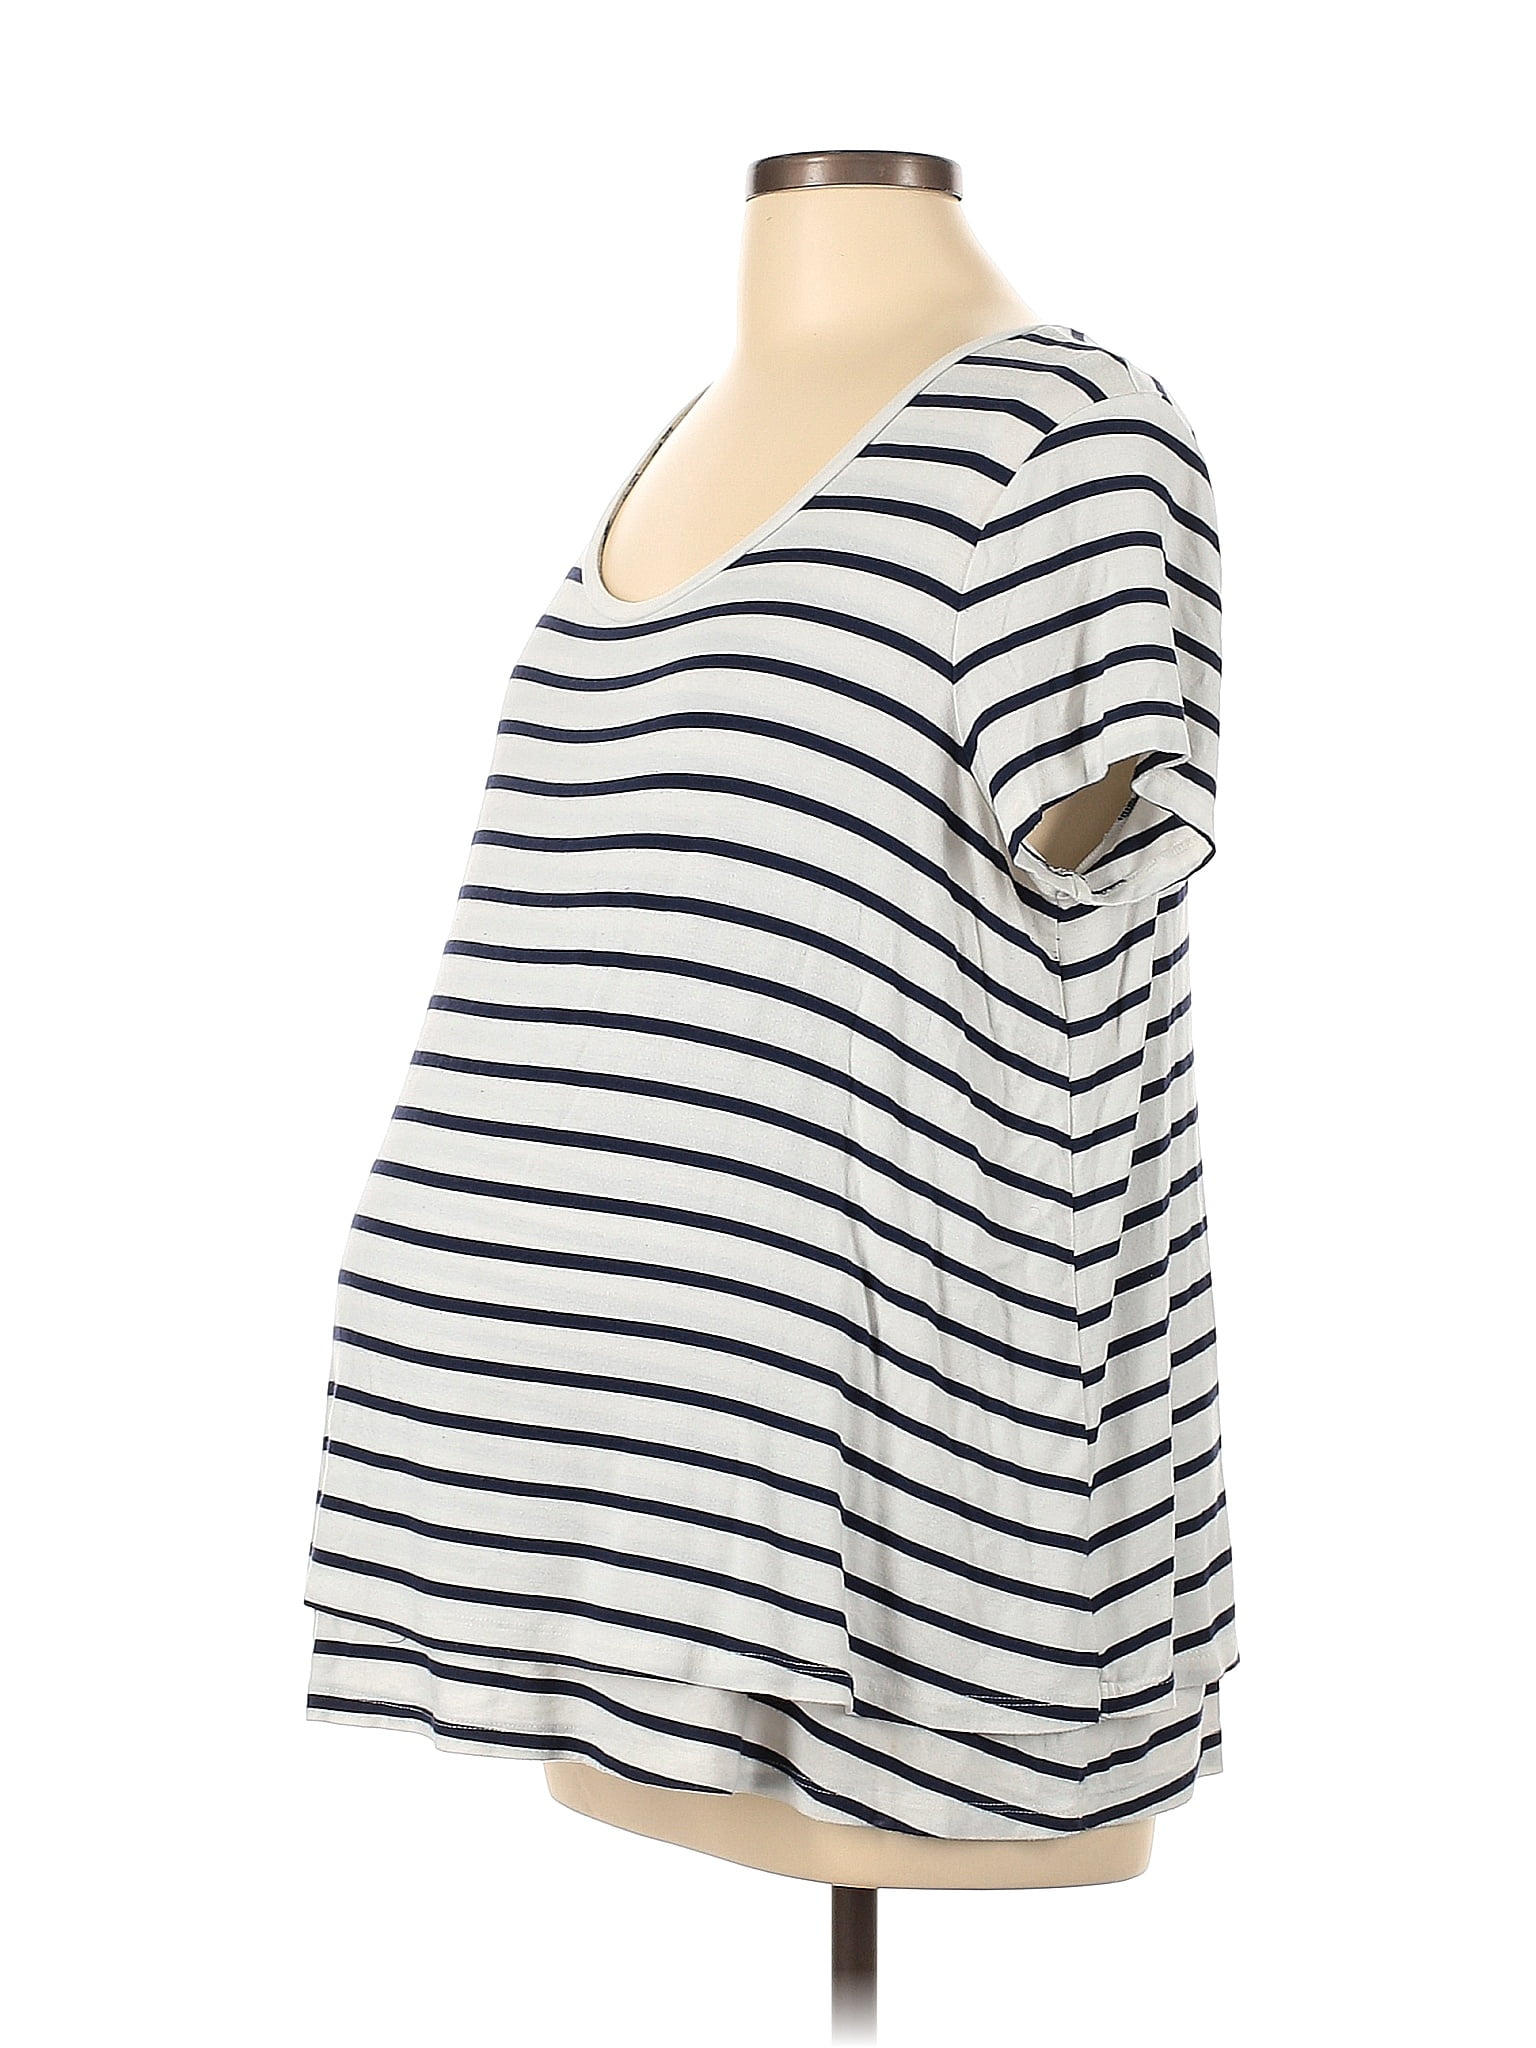 Kindred Bravely Stripes Gray Sleeveless T-Shirt Size S (Maternity) - 46%  off